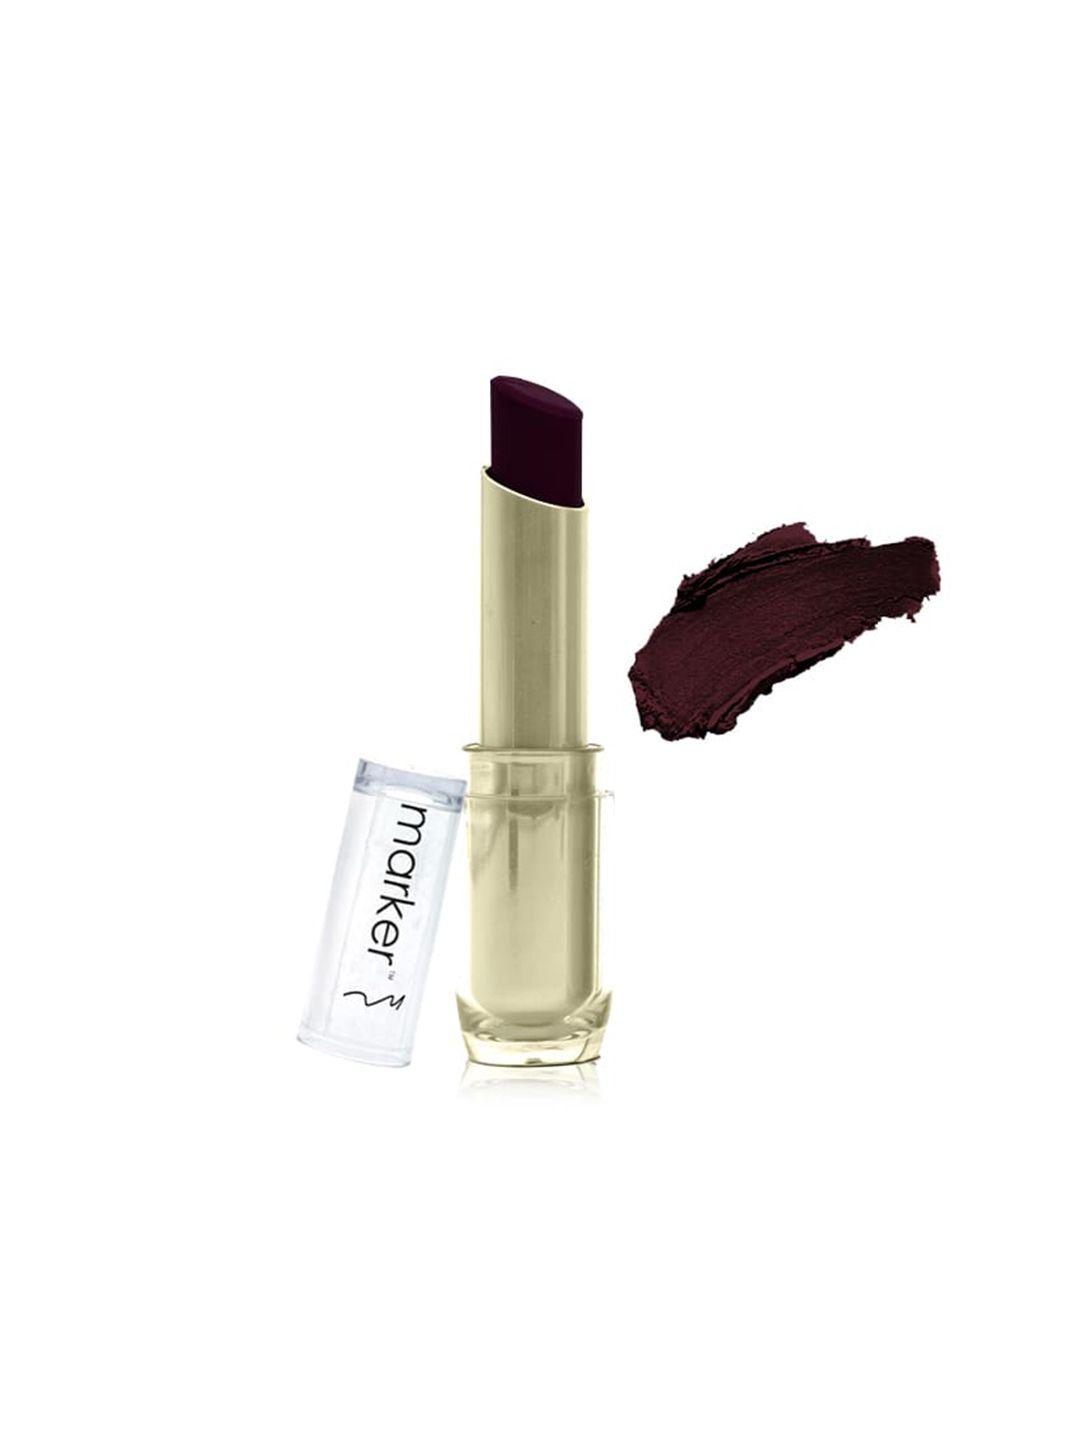 beautyrelay london marker shine glamm lipstick 3.5g- umber